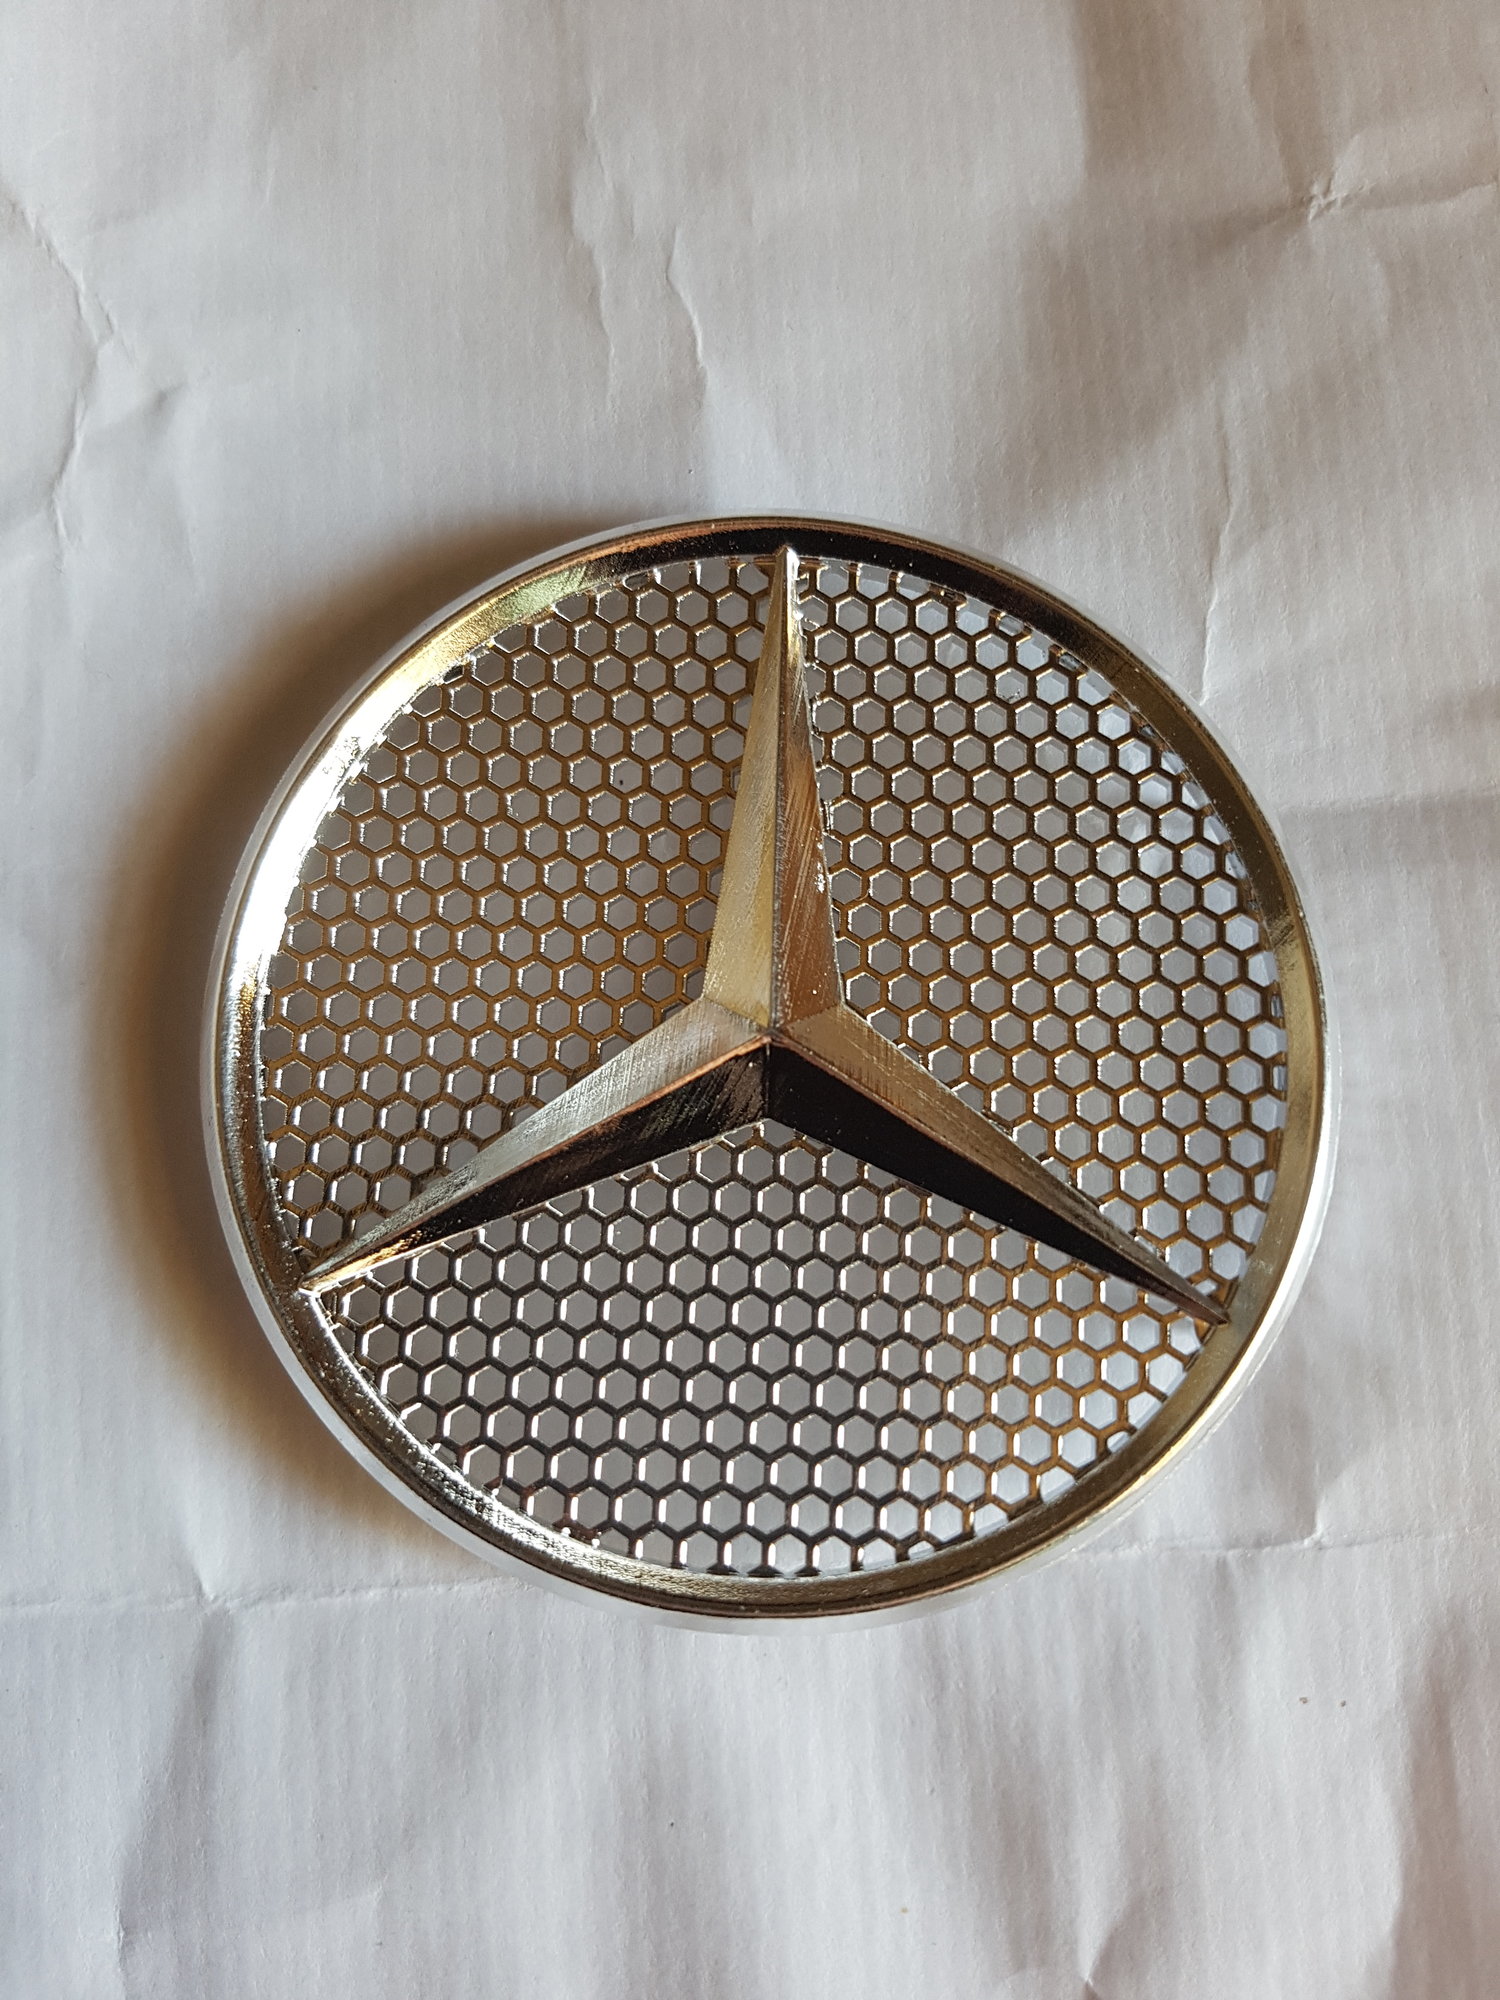 Accessories - Mercedes Benz star M156 Engine cover Emblem Badge - New - Athens, Greece